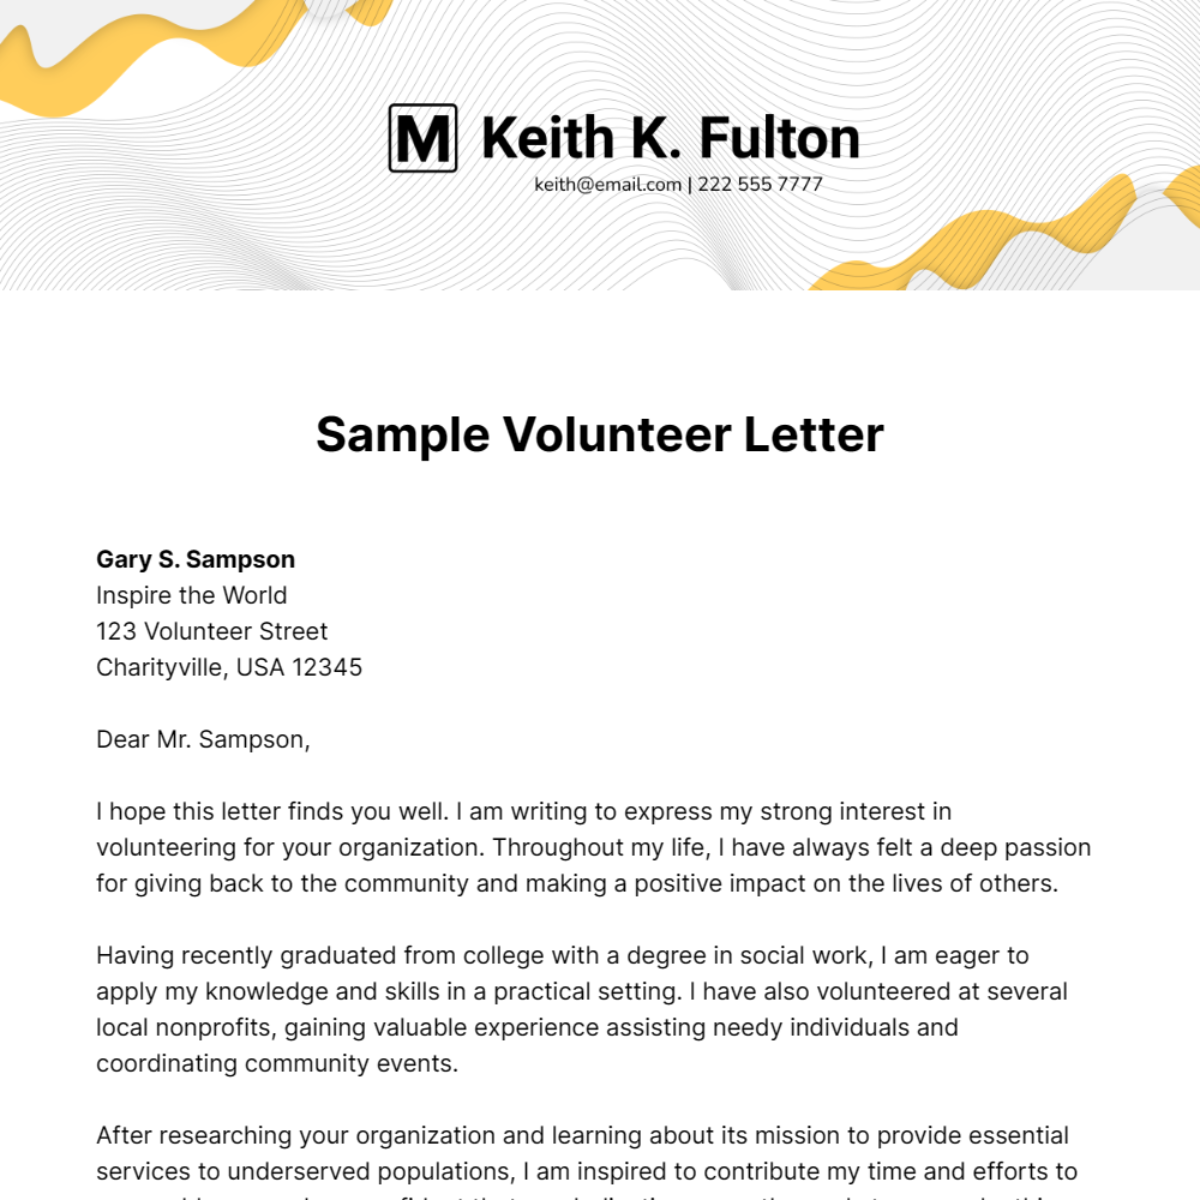 Sample Volunteer Letter Template